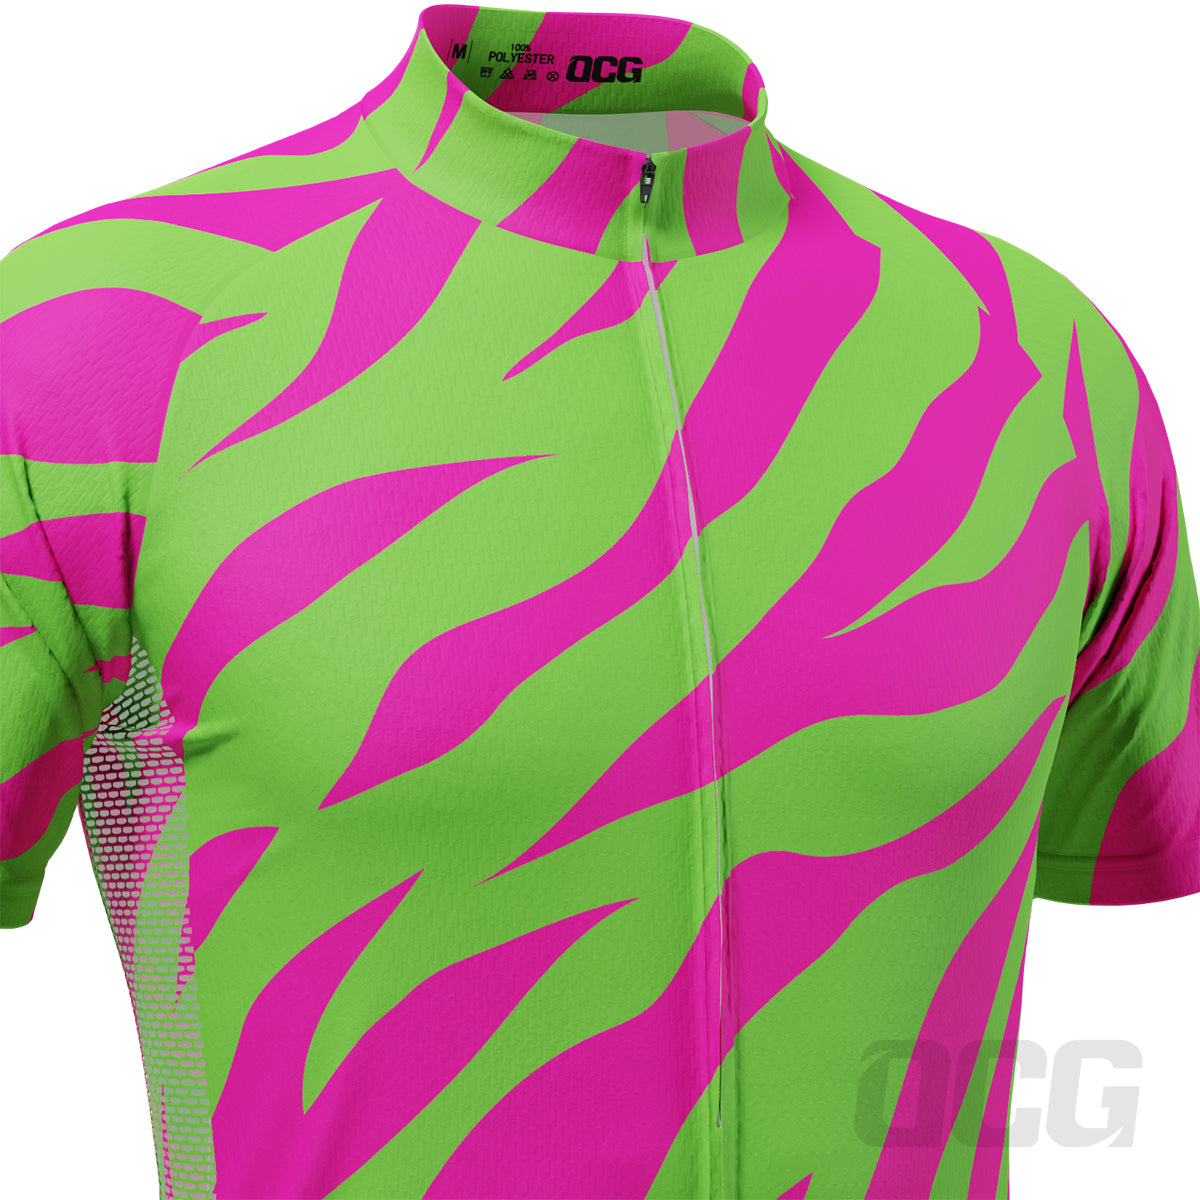 Men's Green & Pink Tiger Short Sleeve Cycling Jersey